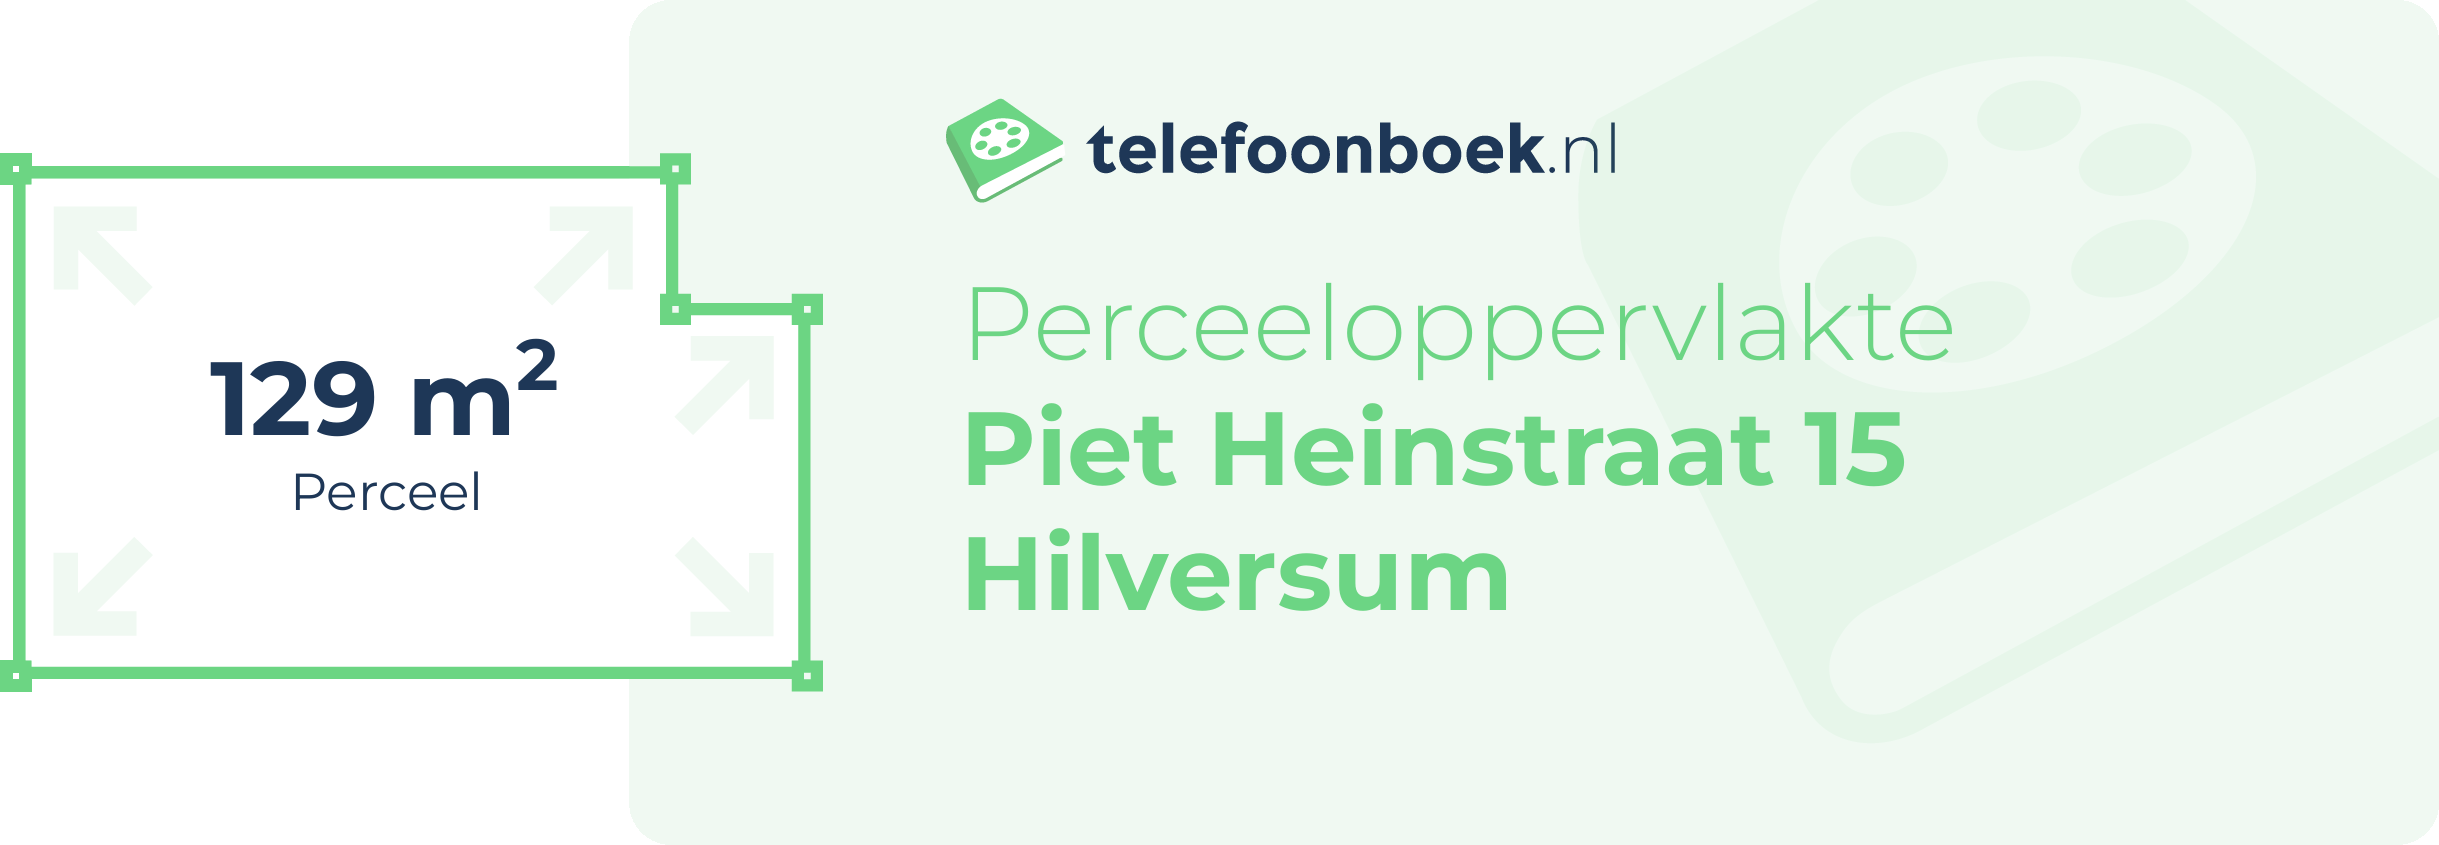 Perceeloppervlakte Piet Heinstraat 15 Hilversum